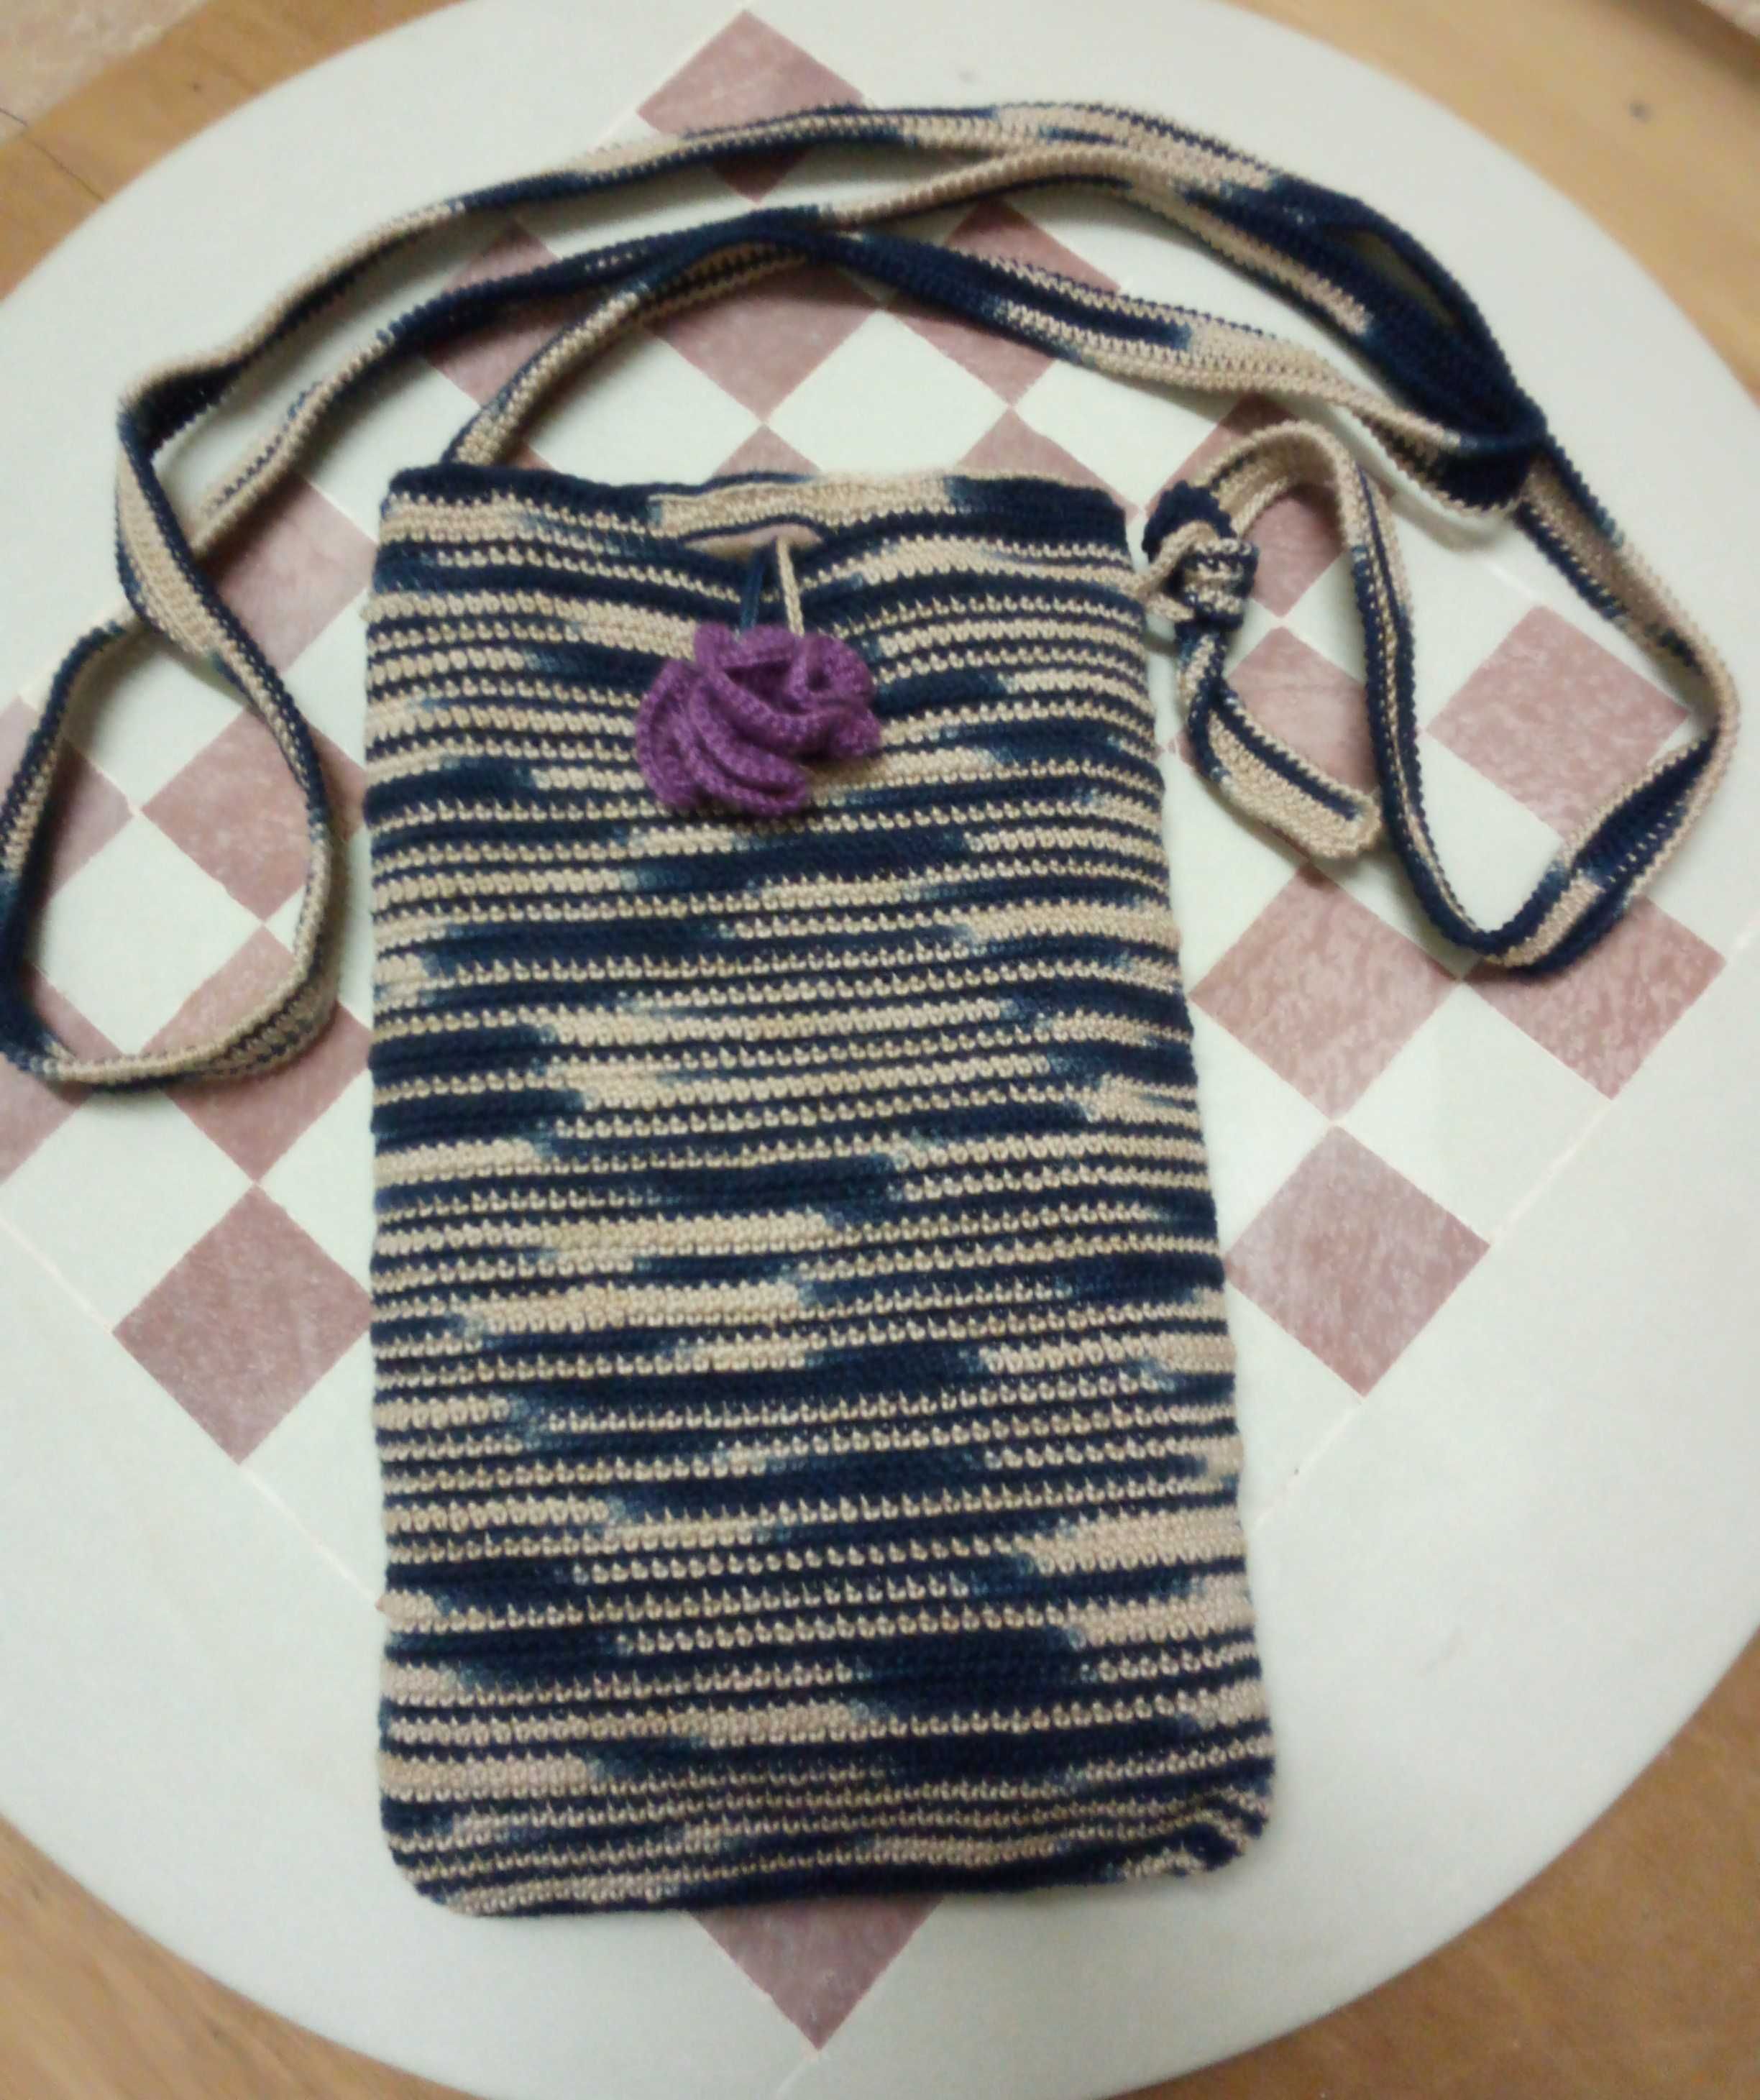 Bolsa para telemóvel (smartphone ) em crochet